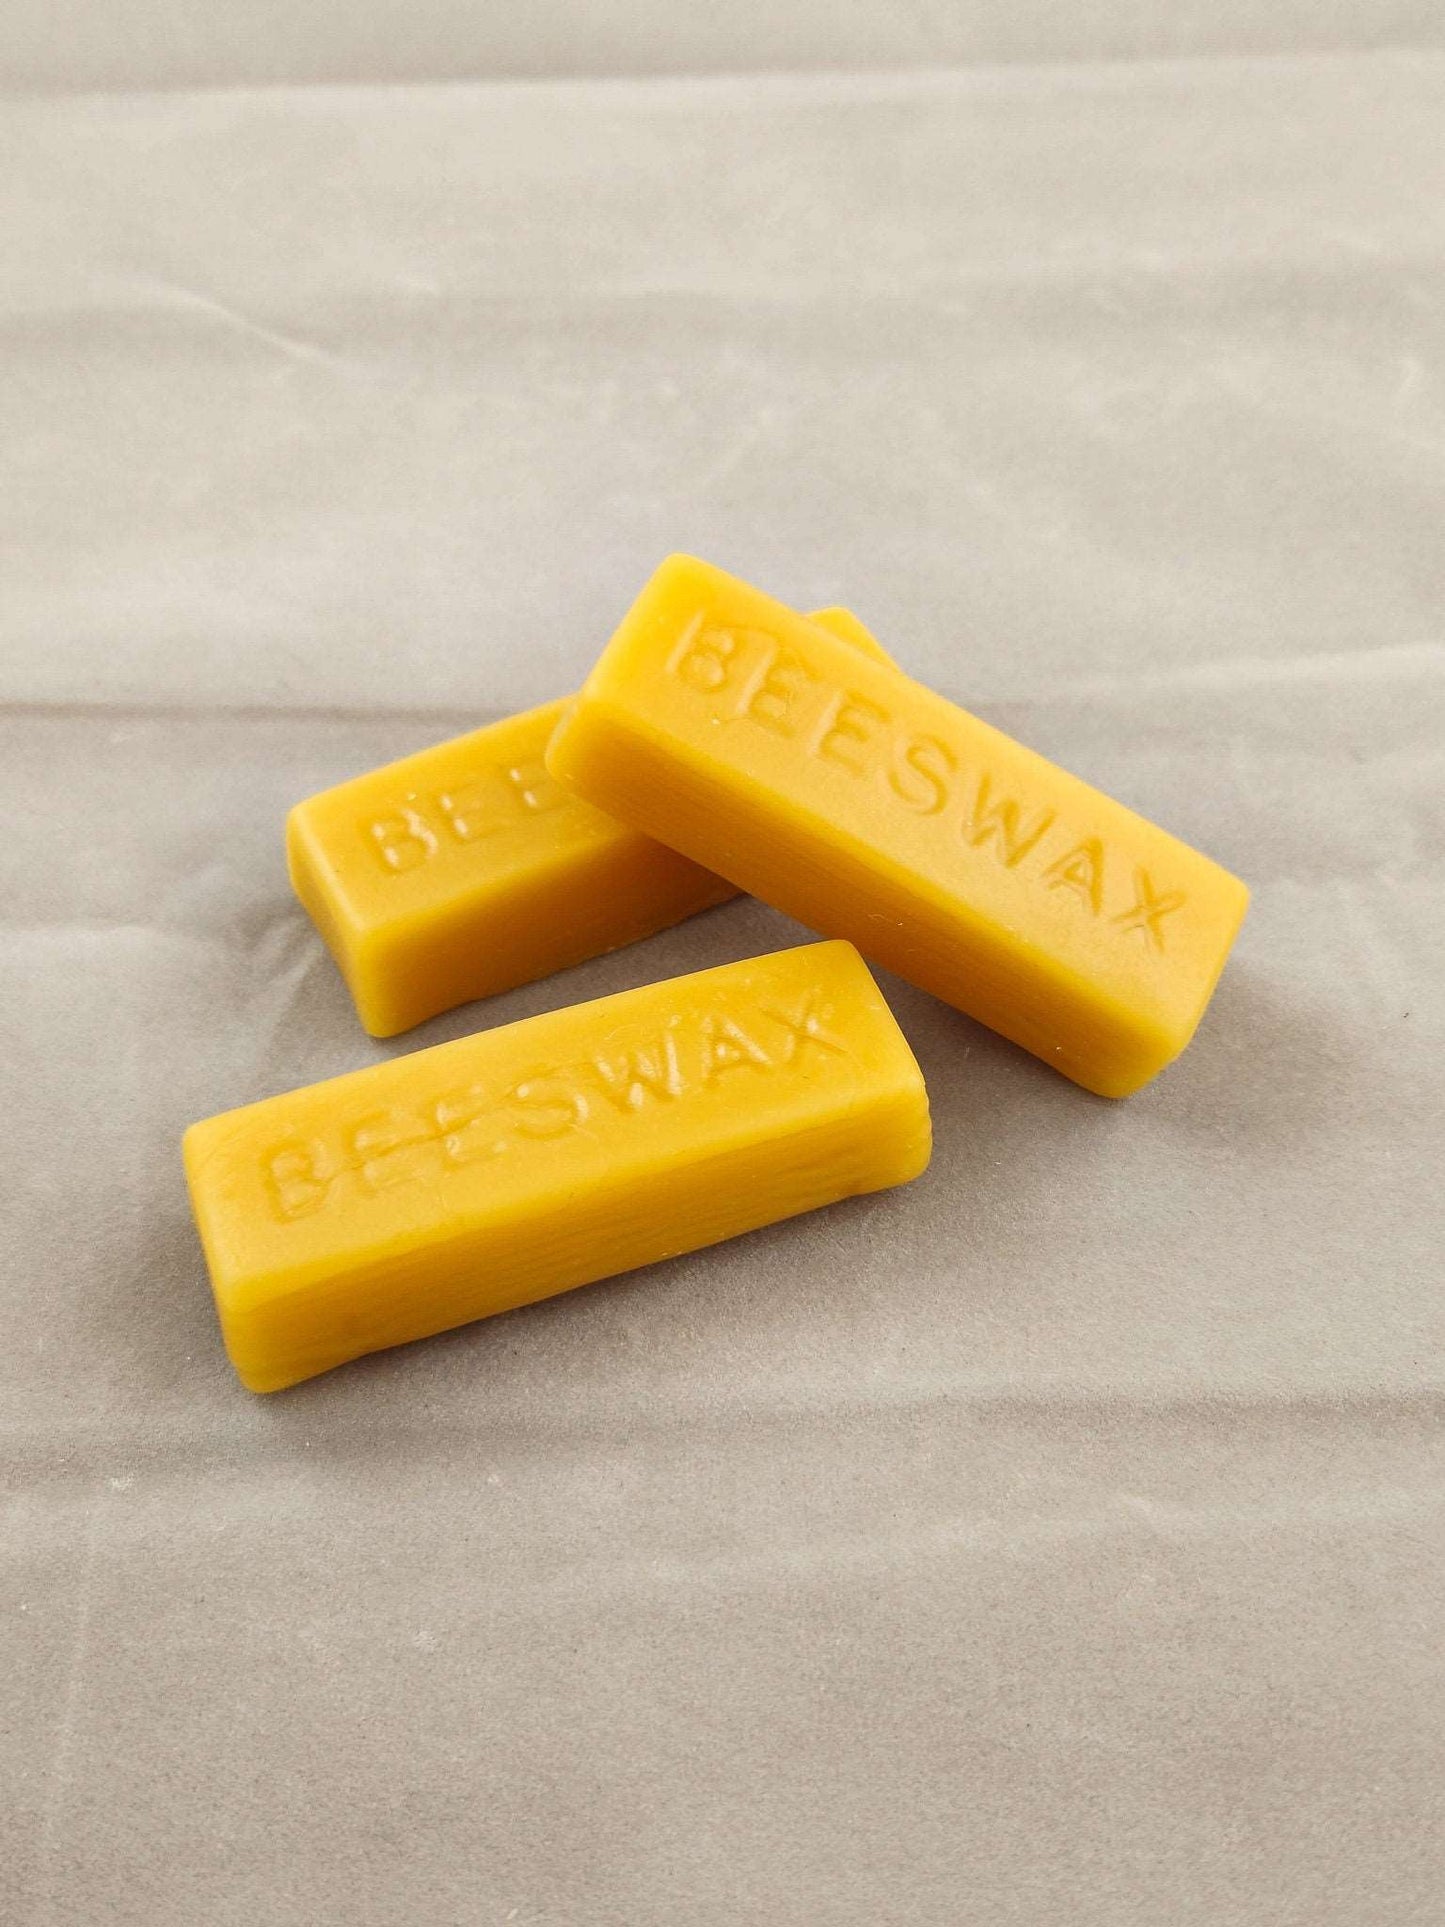 1 oz. 100% Beeswax Bars | 5 bars | 12 bars Set of 3 'Beeswax'  Stamped